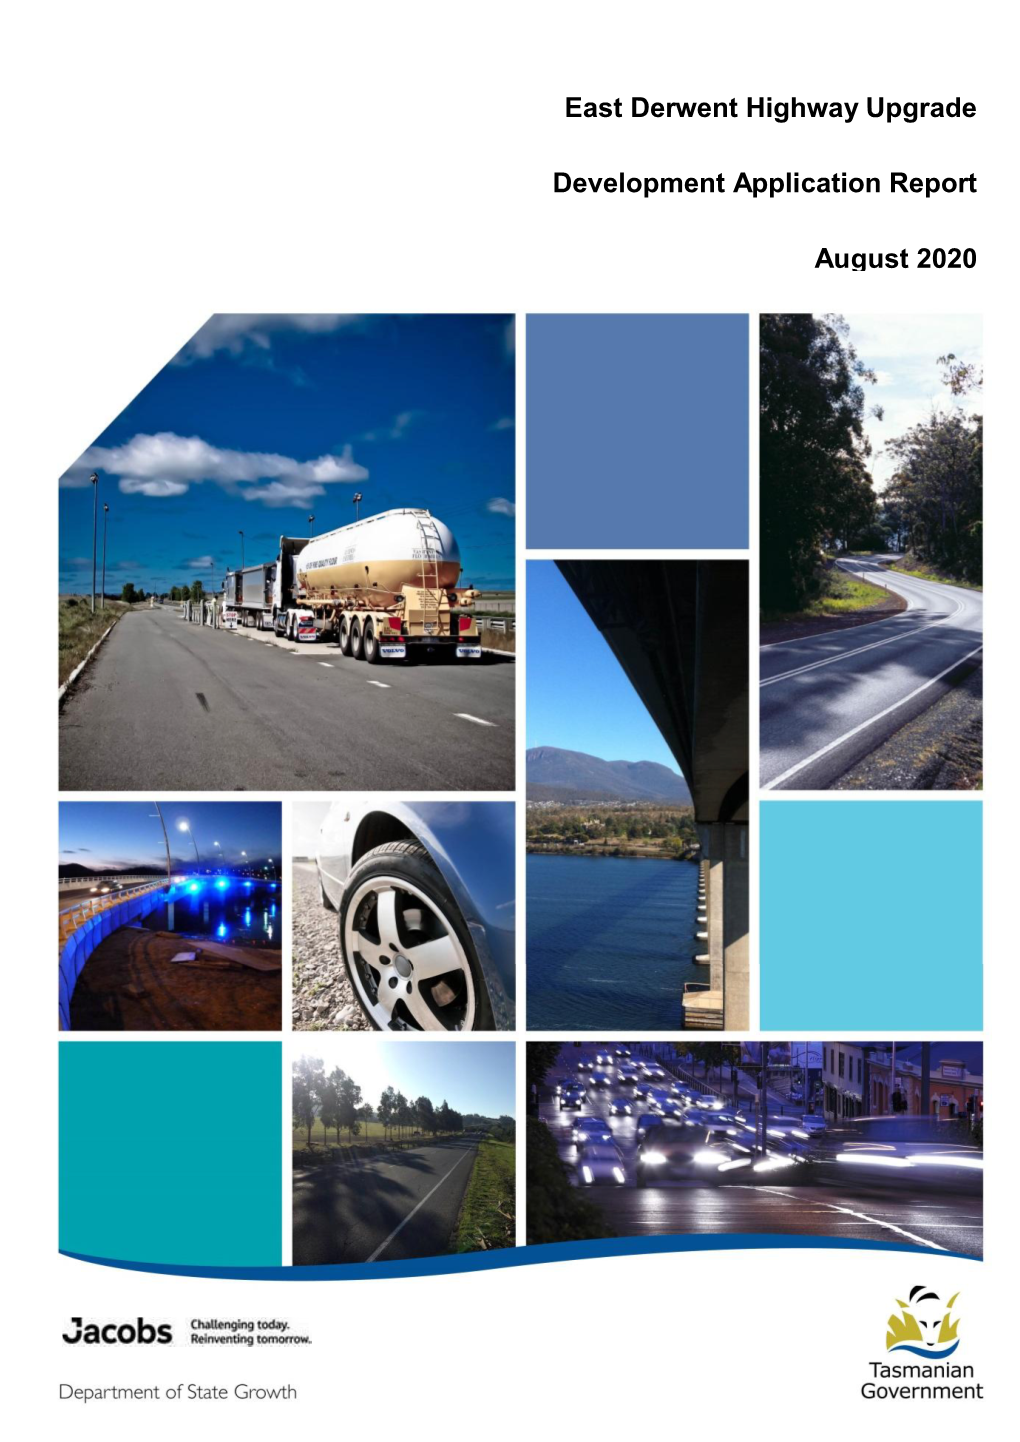 East Derwent Highway Upgrade Development Application Report